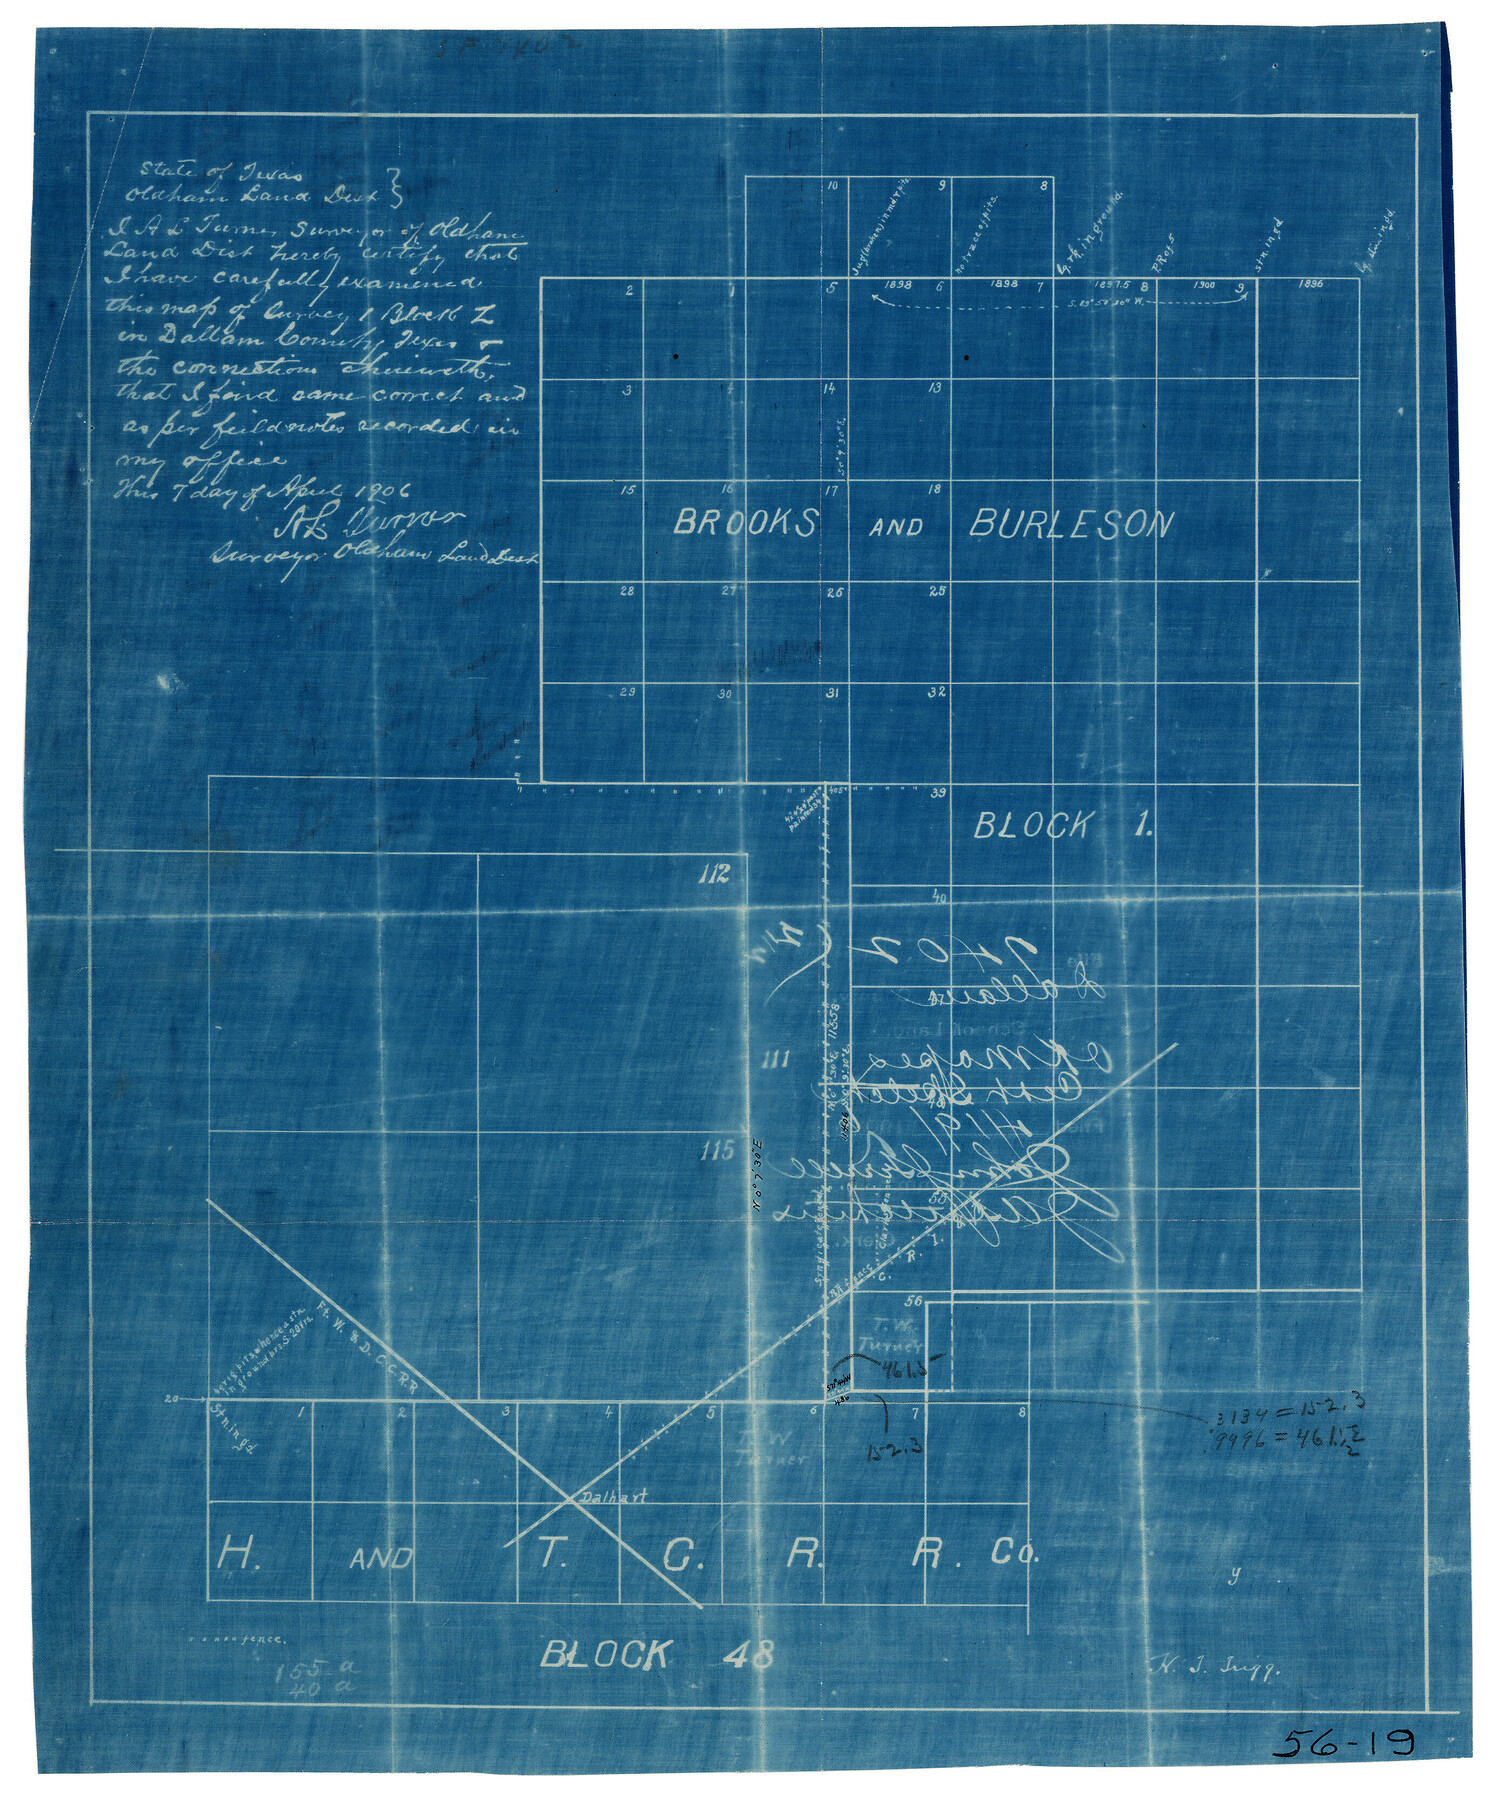 90514, [Brooks & Burleson Block 1], Twichell Survey Records